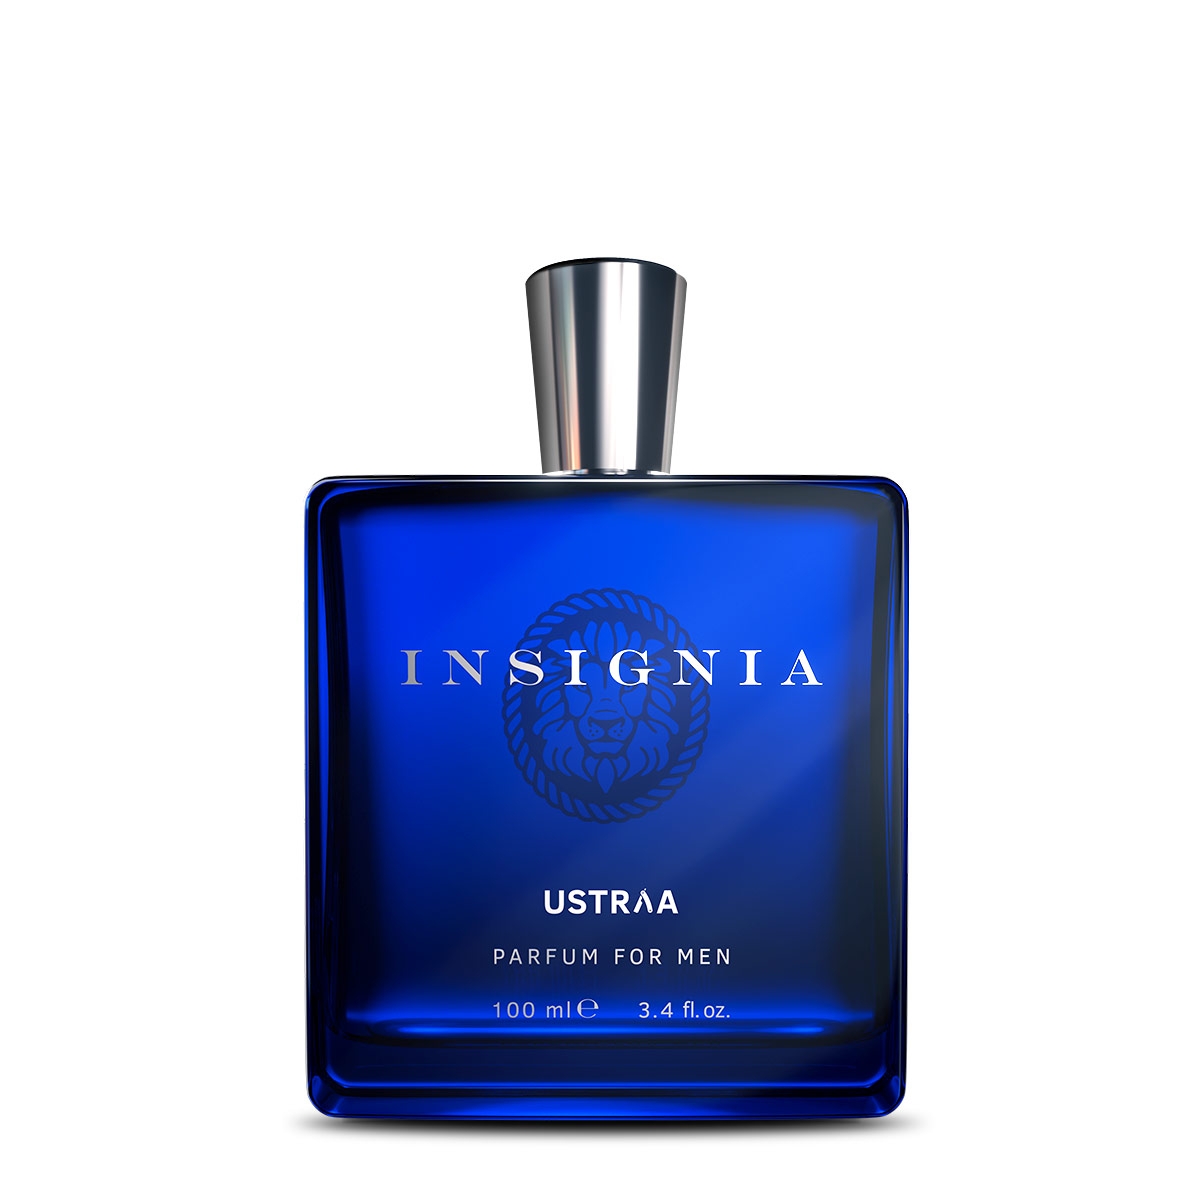 Ustraa | Ustraa Perfume for Men-Insignia-(100ml)